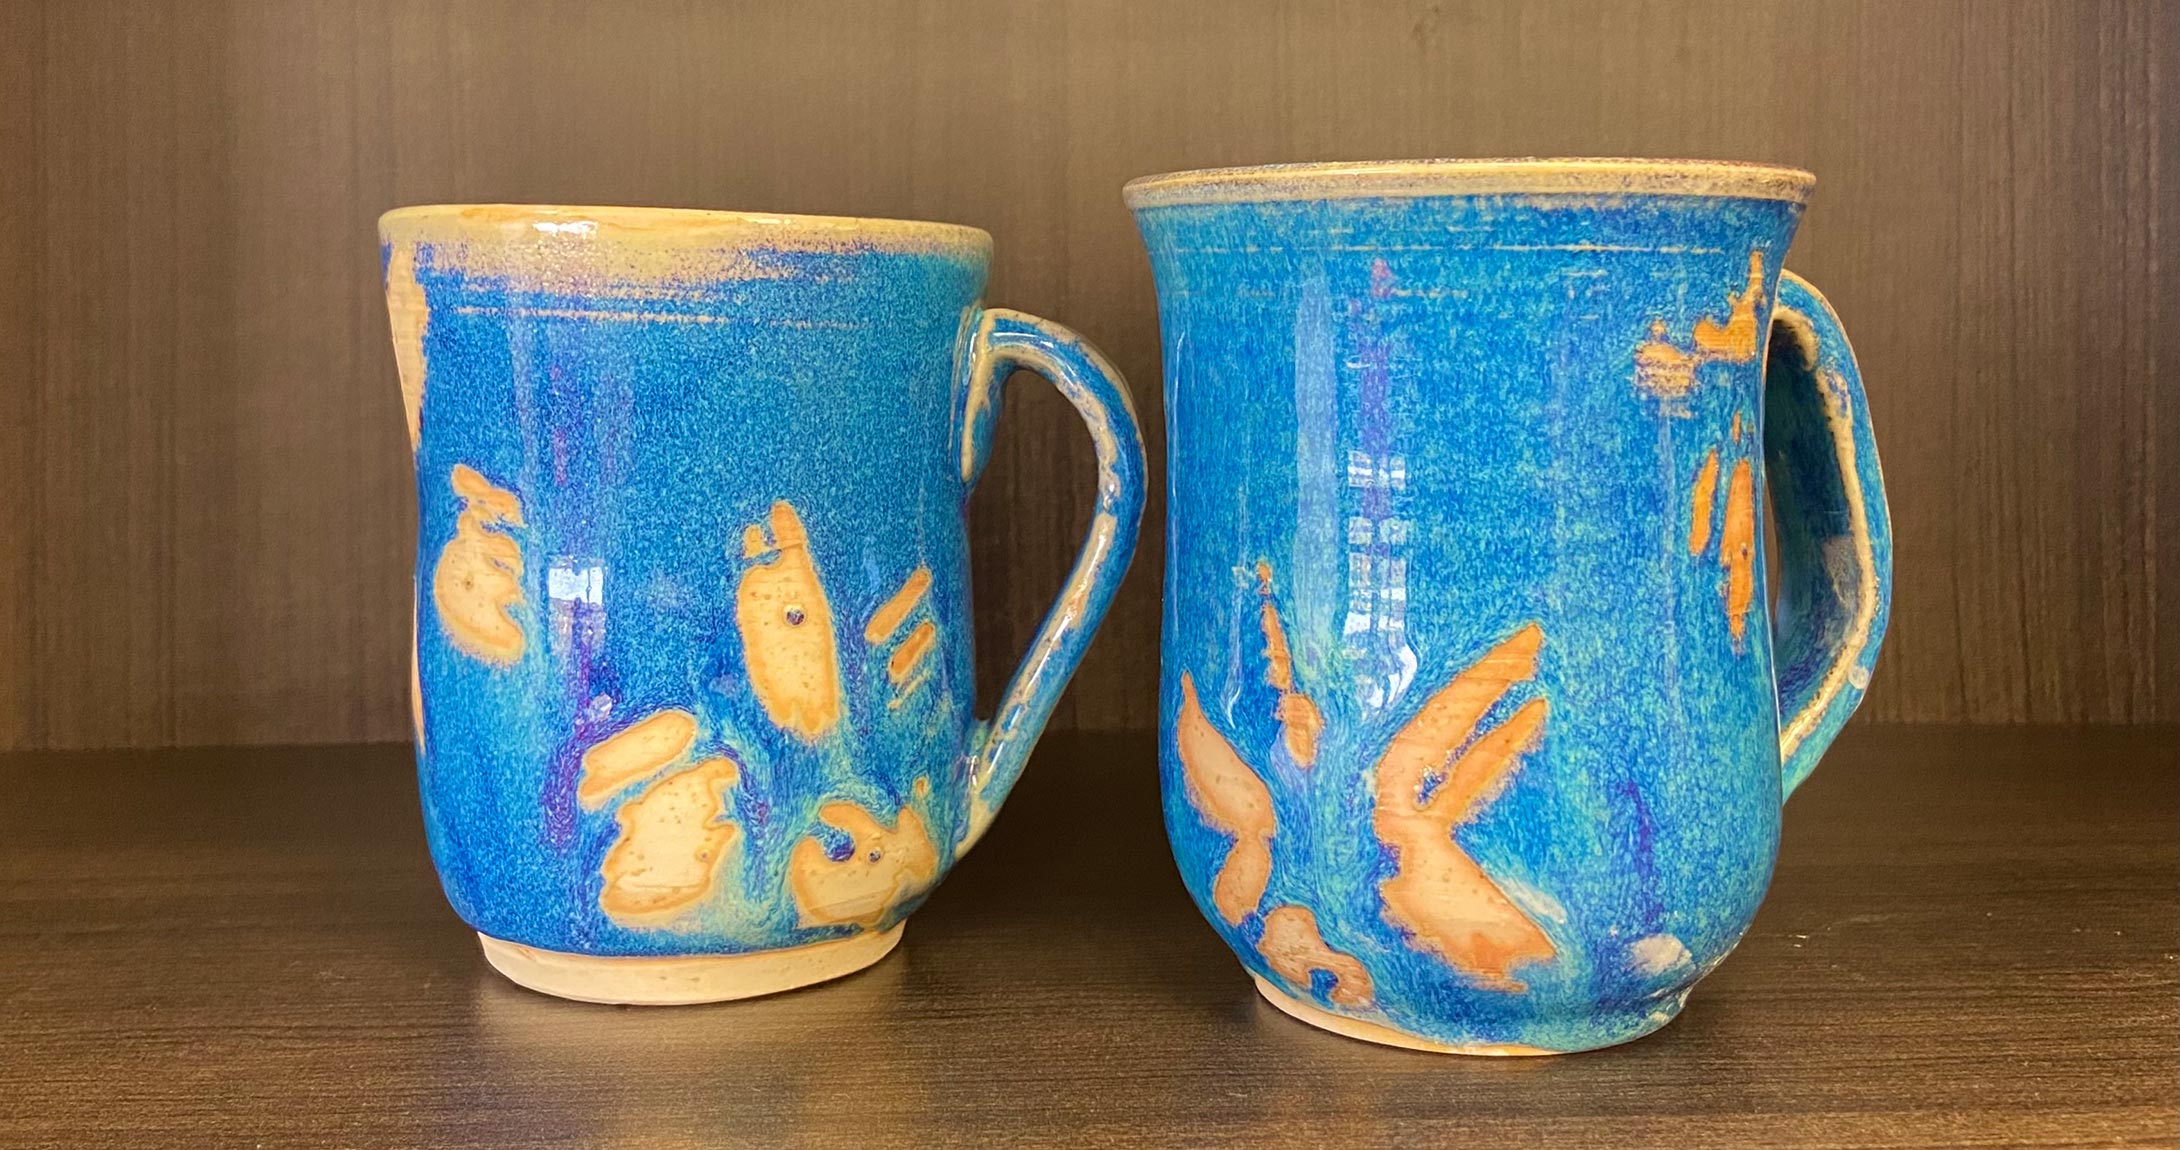 Blue handmade mugs by Emily Muscroft